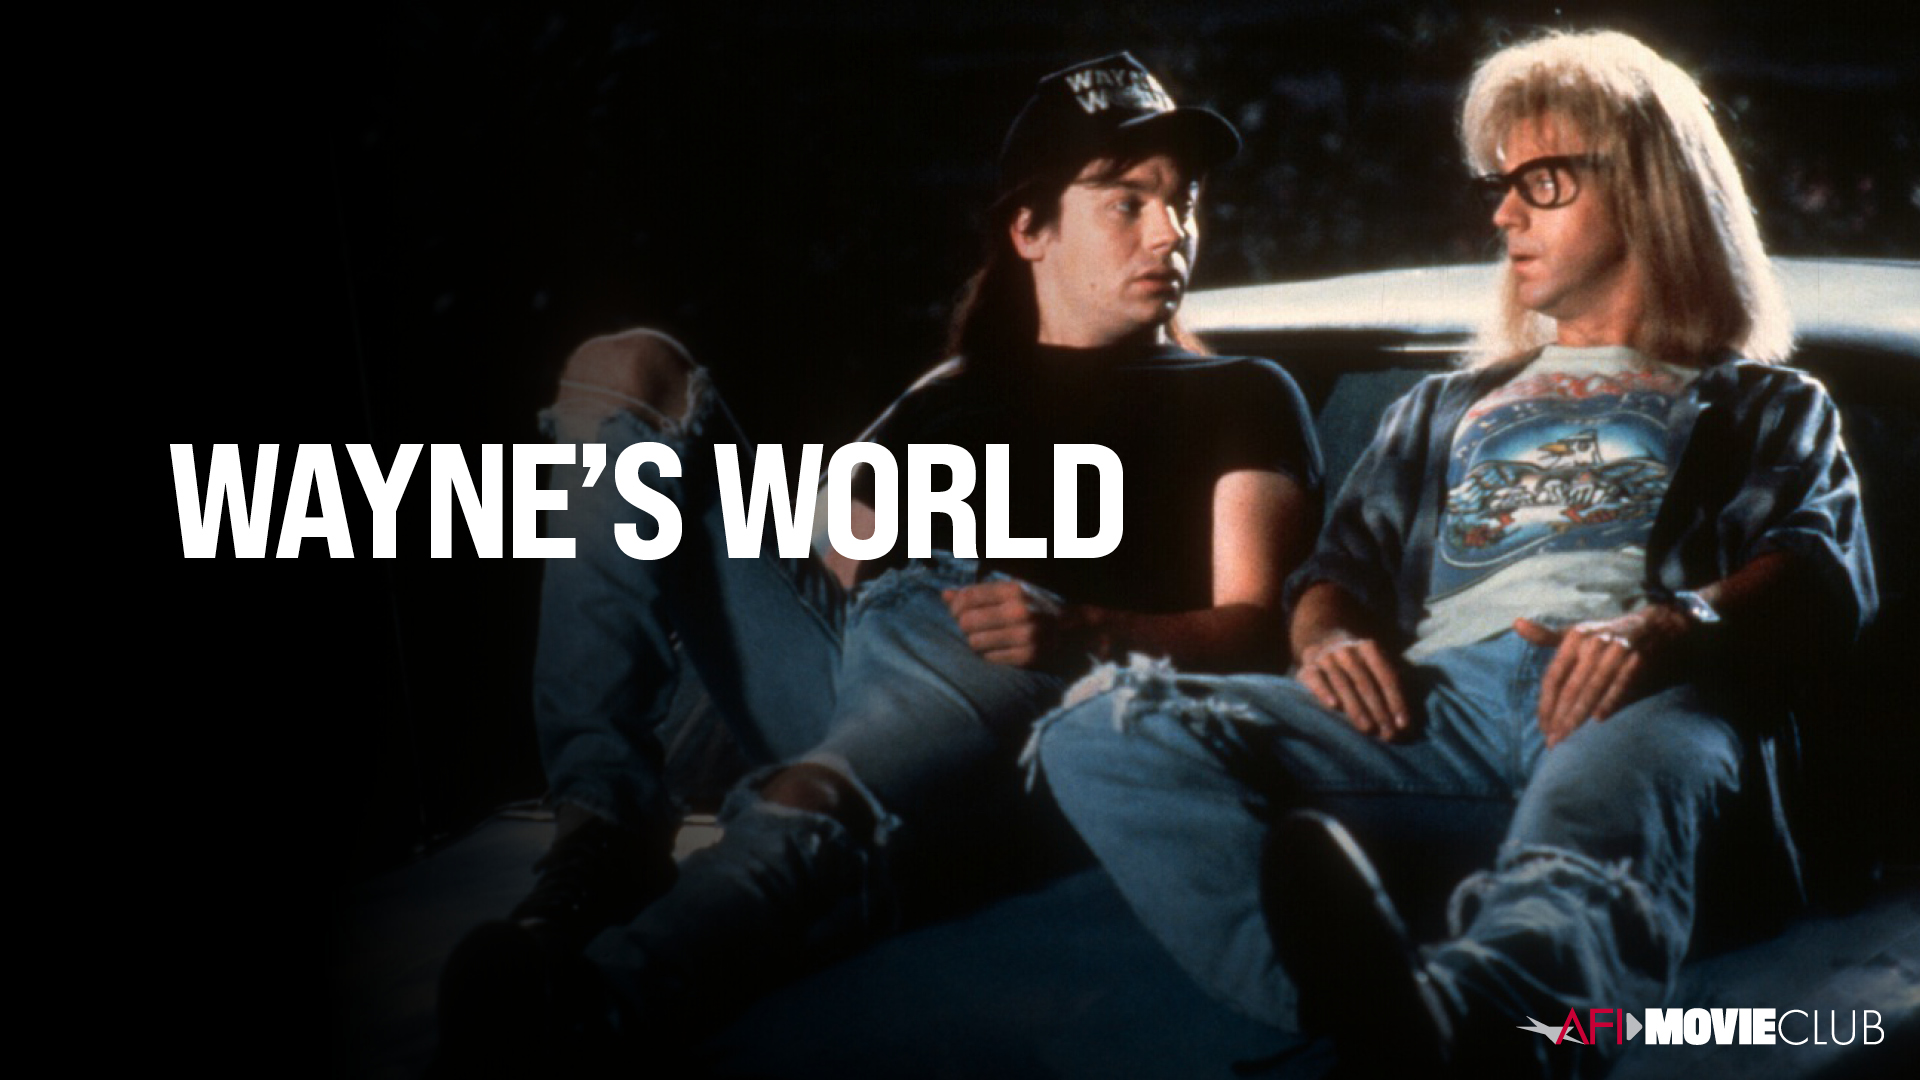 Wayne's World Film Still - Mike Myers and Dana Carvey